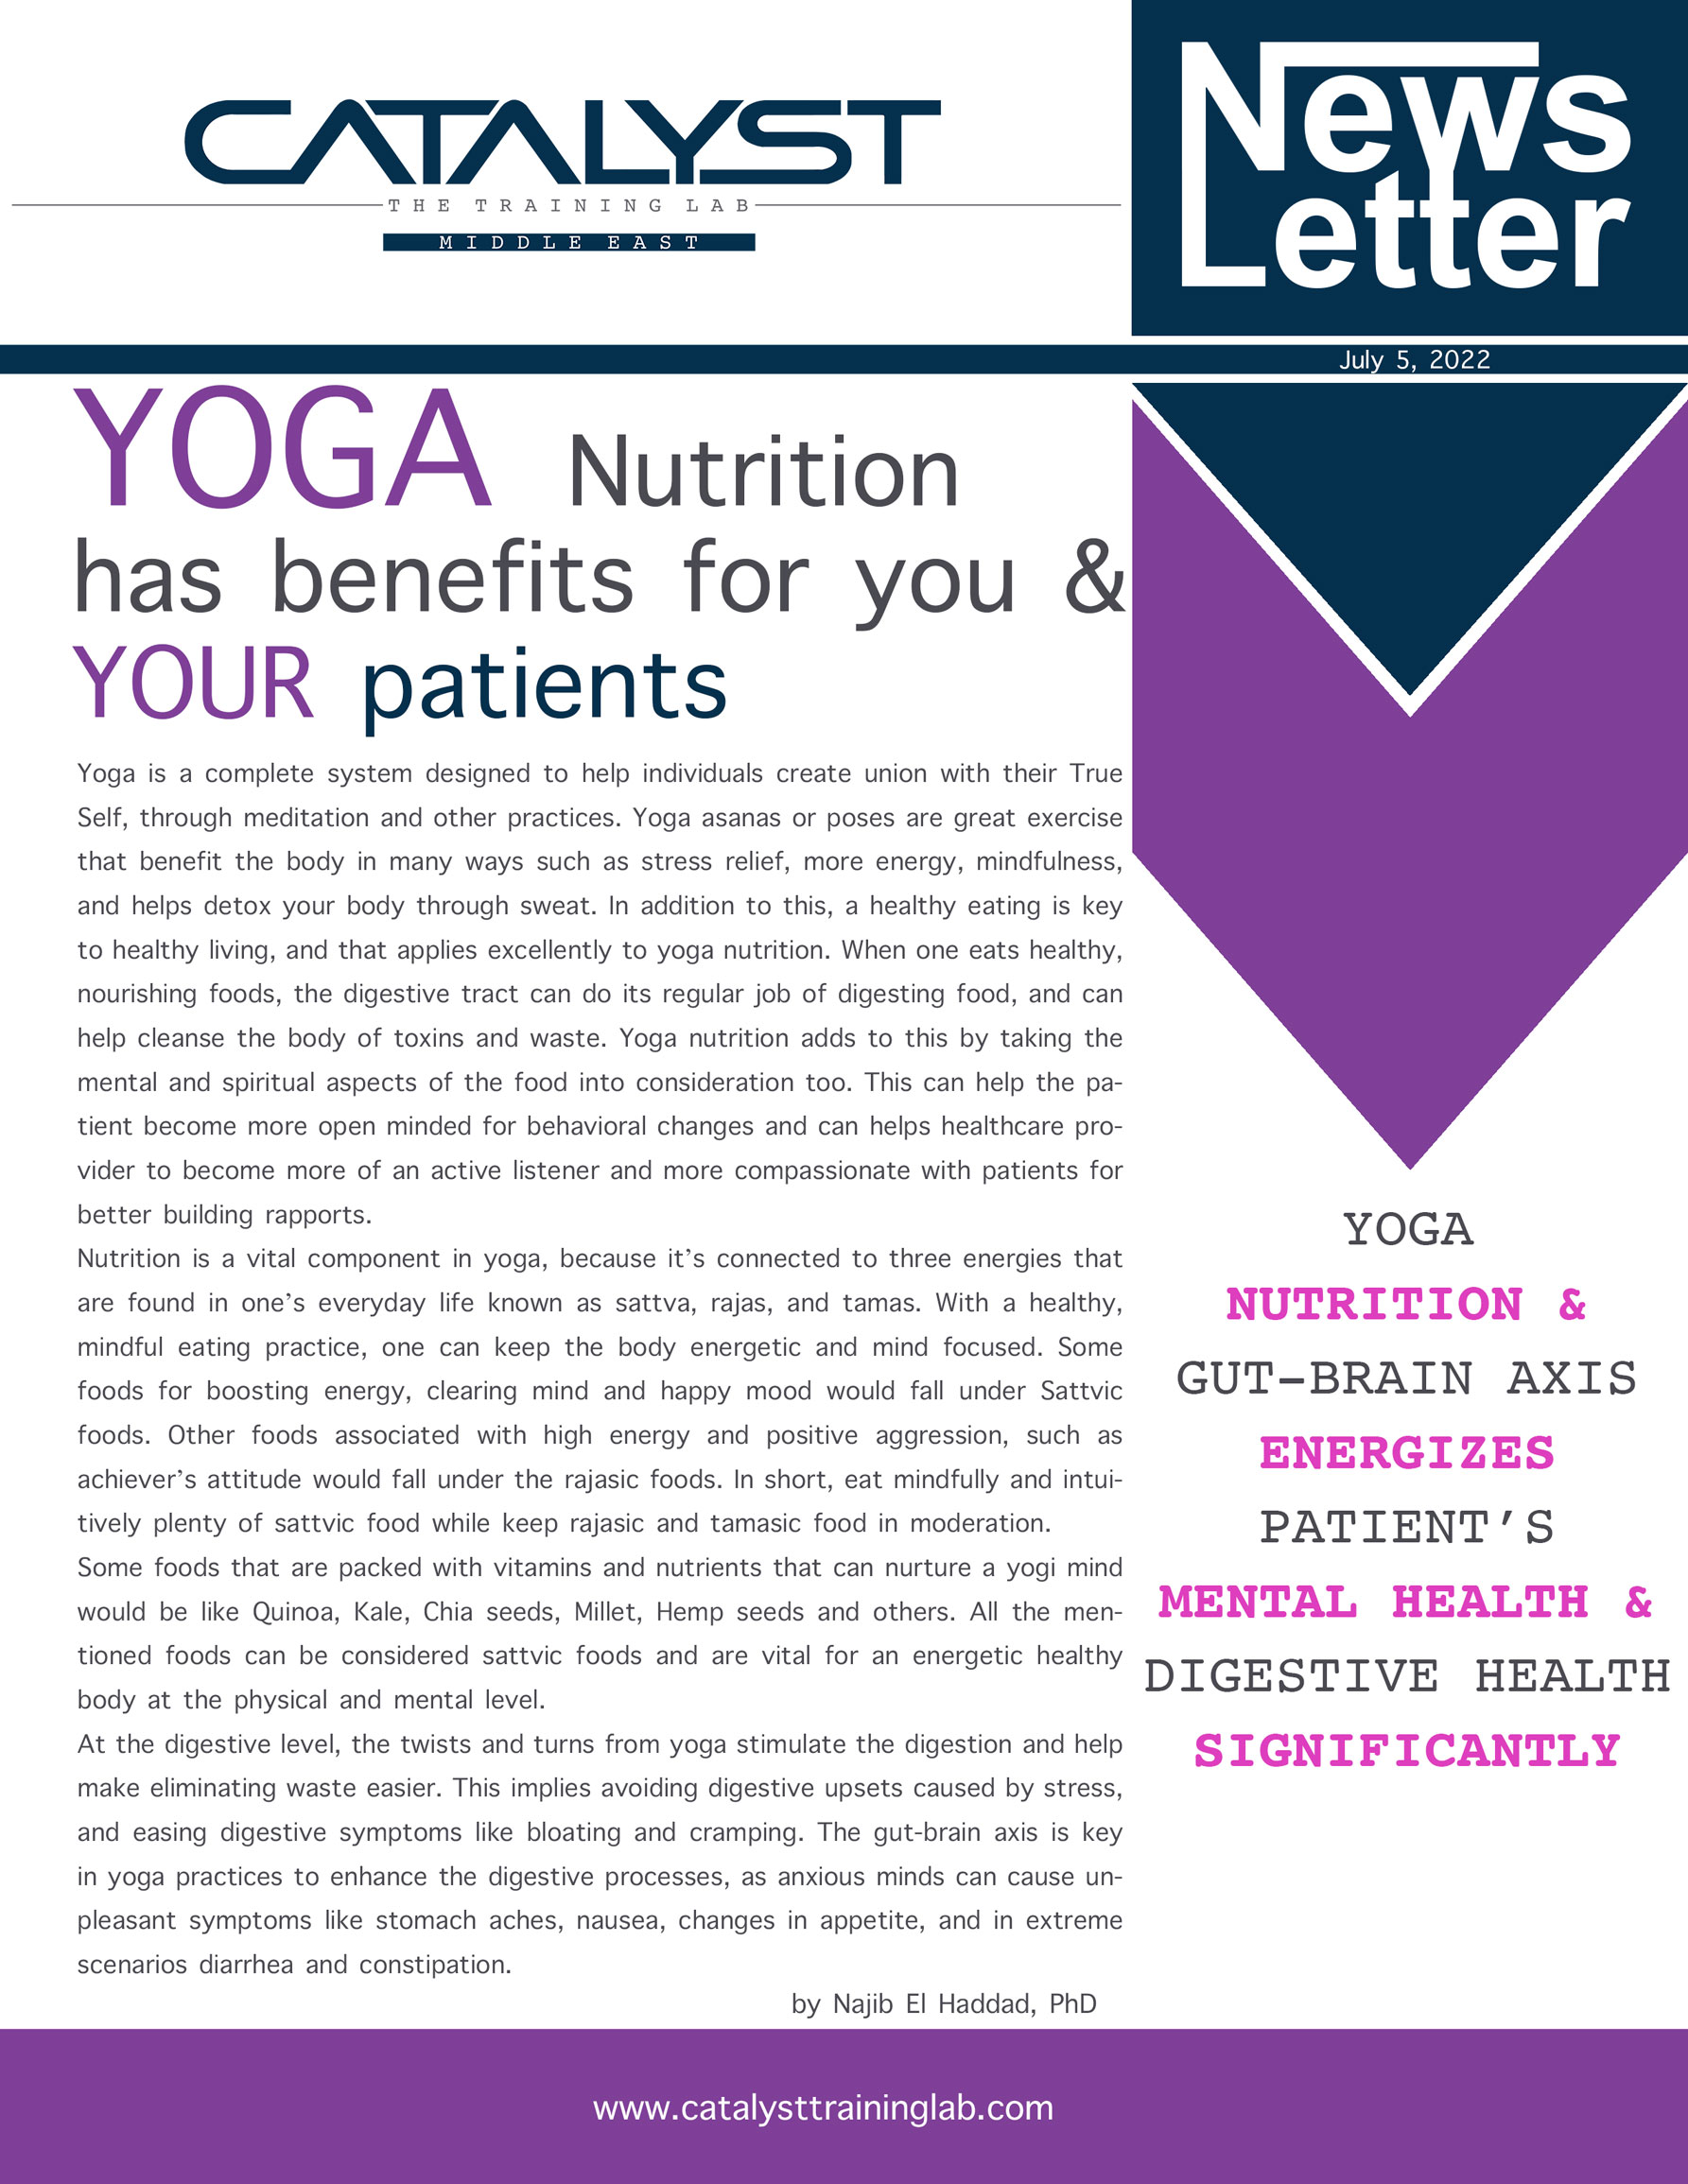 Yoga Nutrition Benefits 